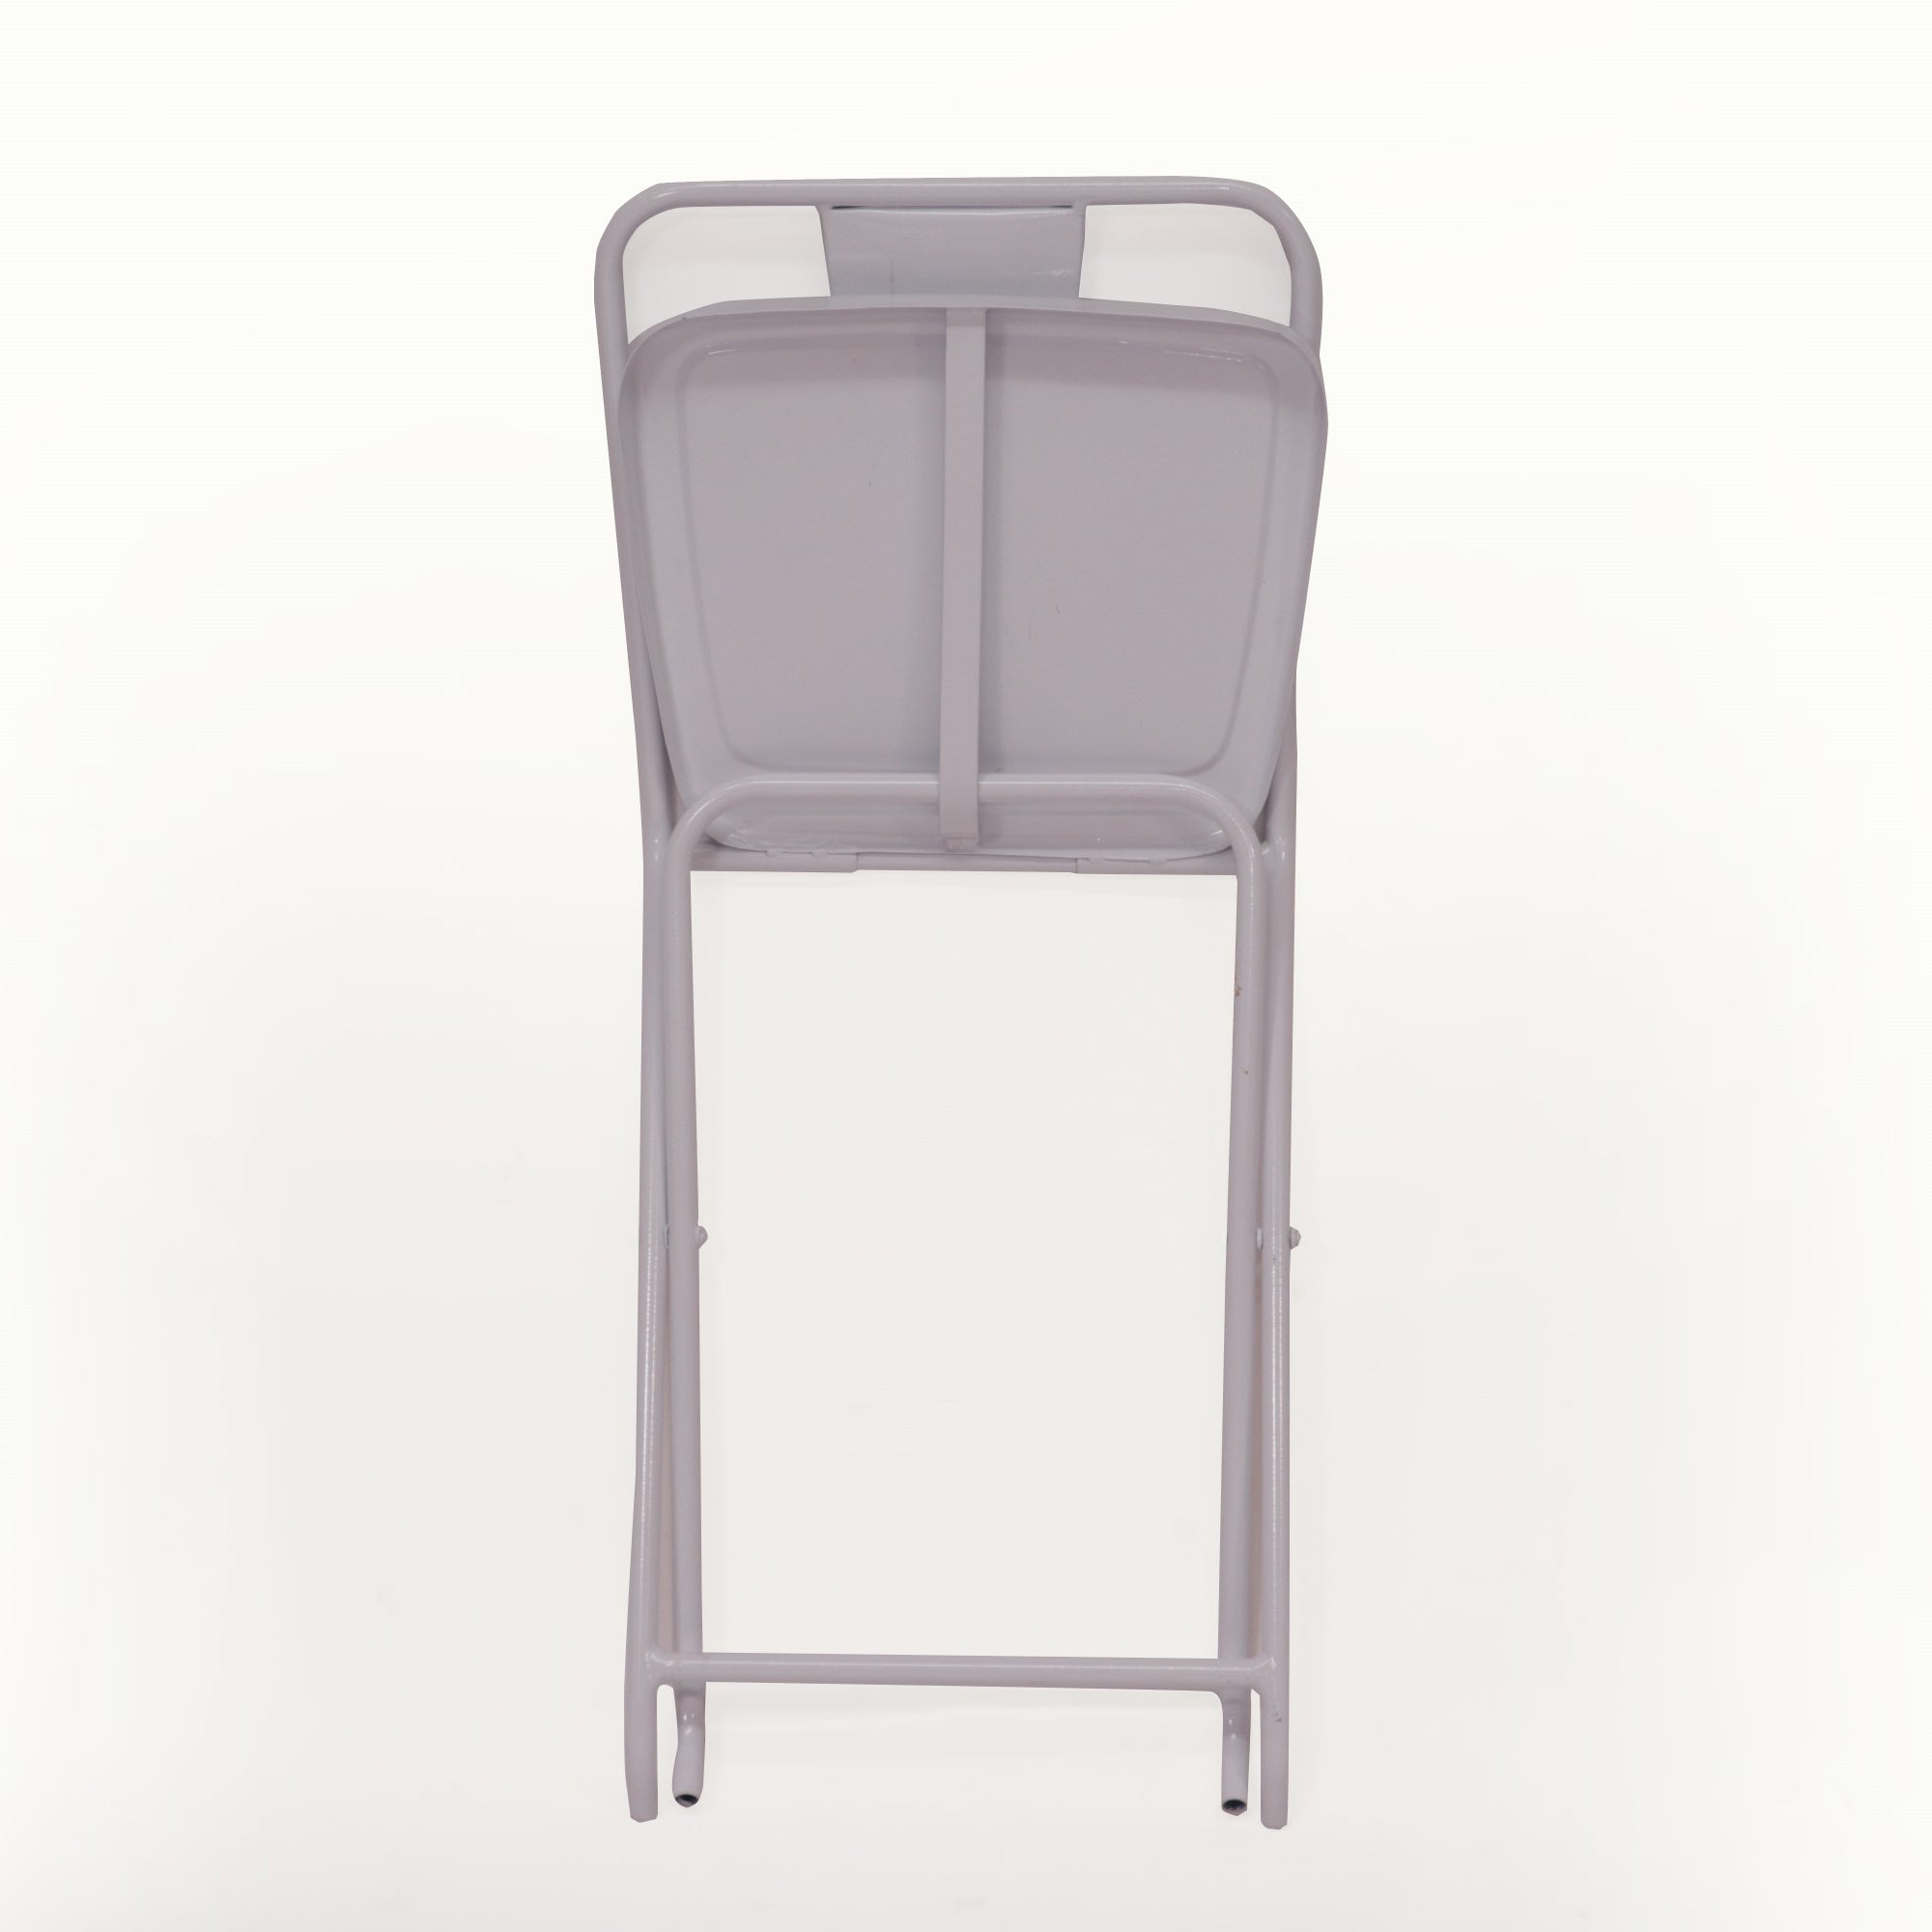 Bright Metallic Folding Chair Folding Chair